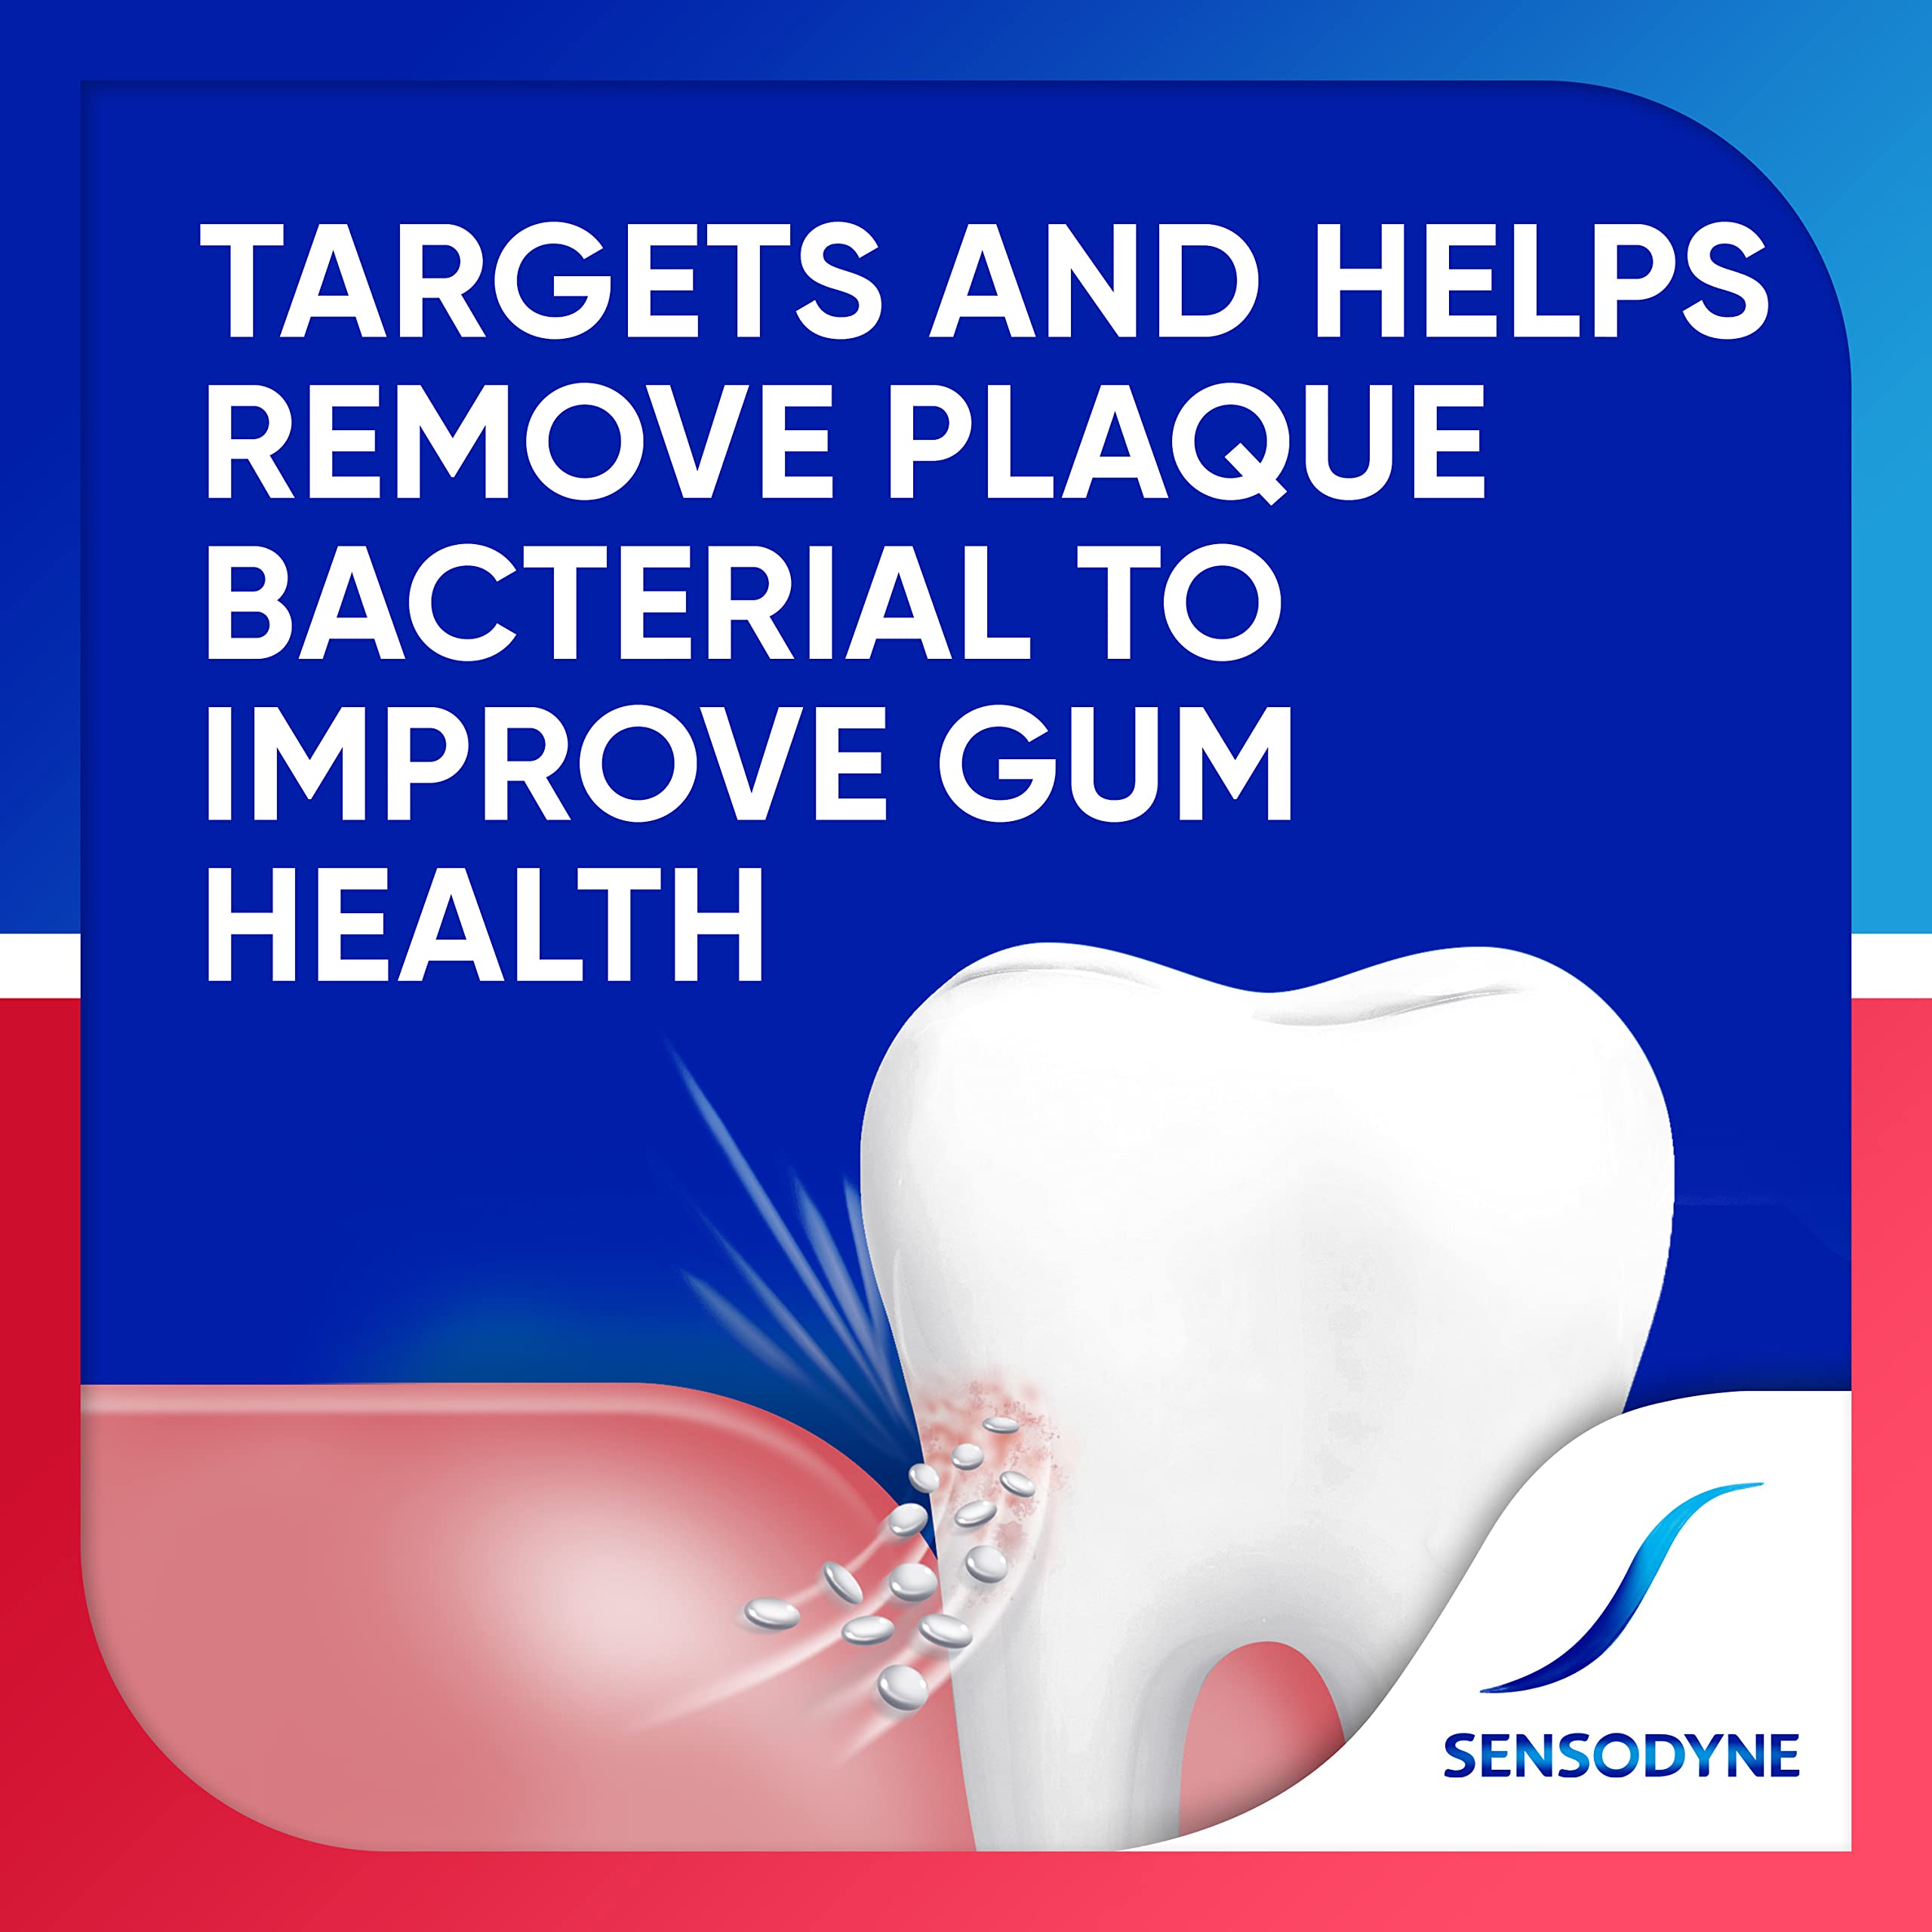 Sensodyne Sensitivity & Gum Whitening Toothpaste, Toothpaste for Sensitive Teeth & Gum Problems, 3.4 Ounces (Pack of 3)